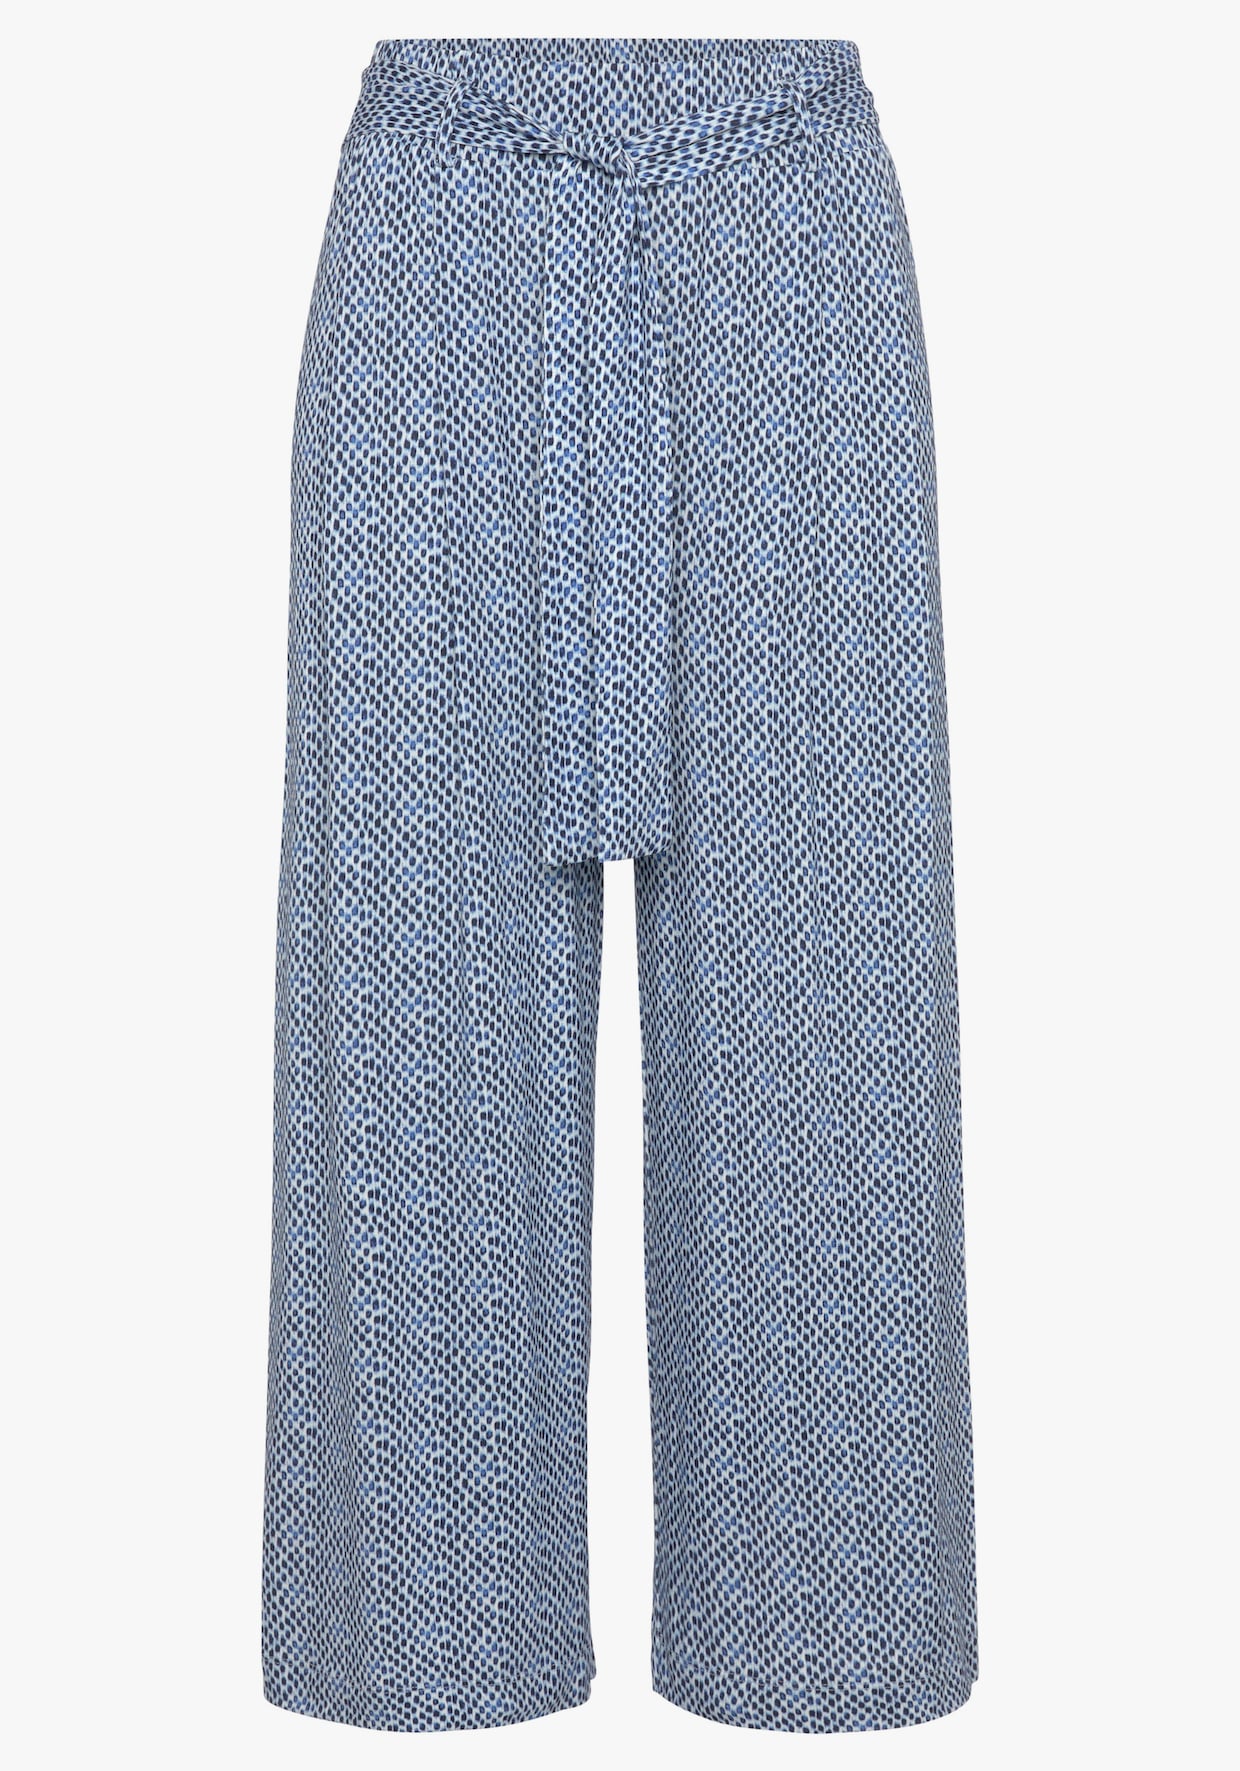 LASCANA Jupe-culotte - bleu imprimé